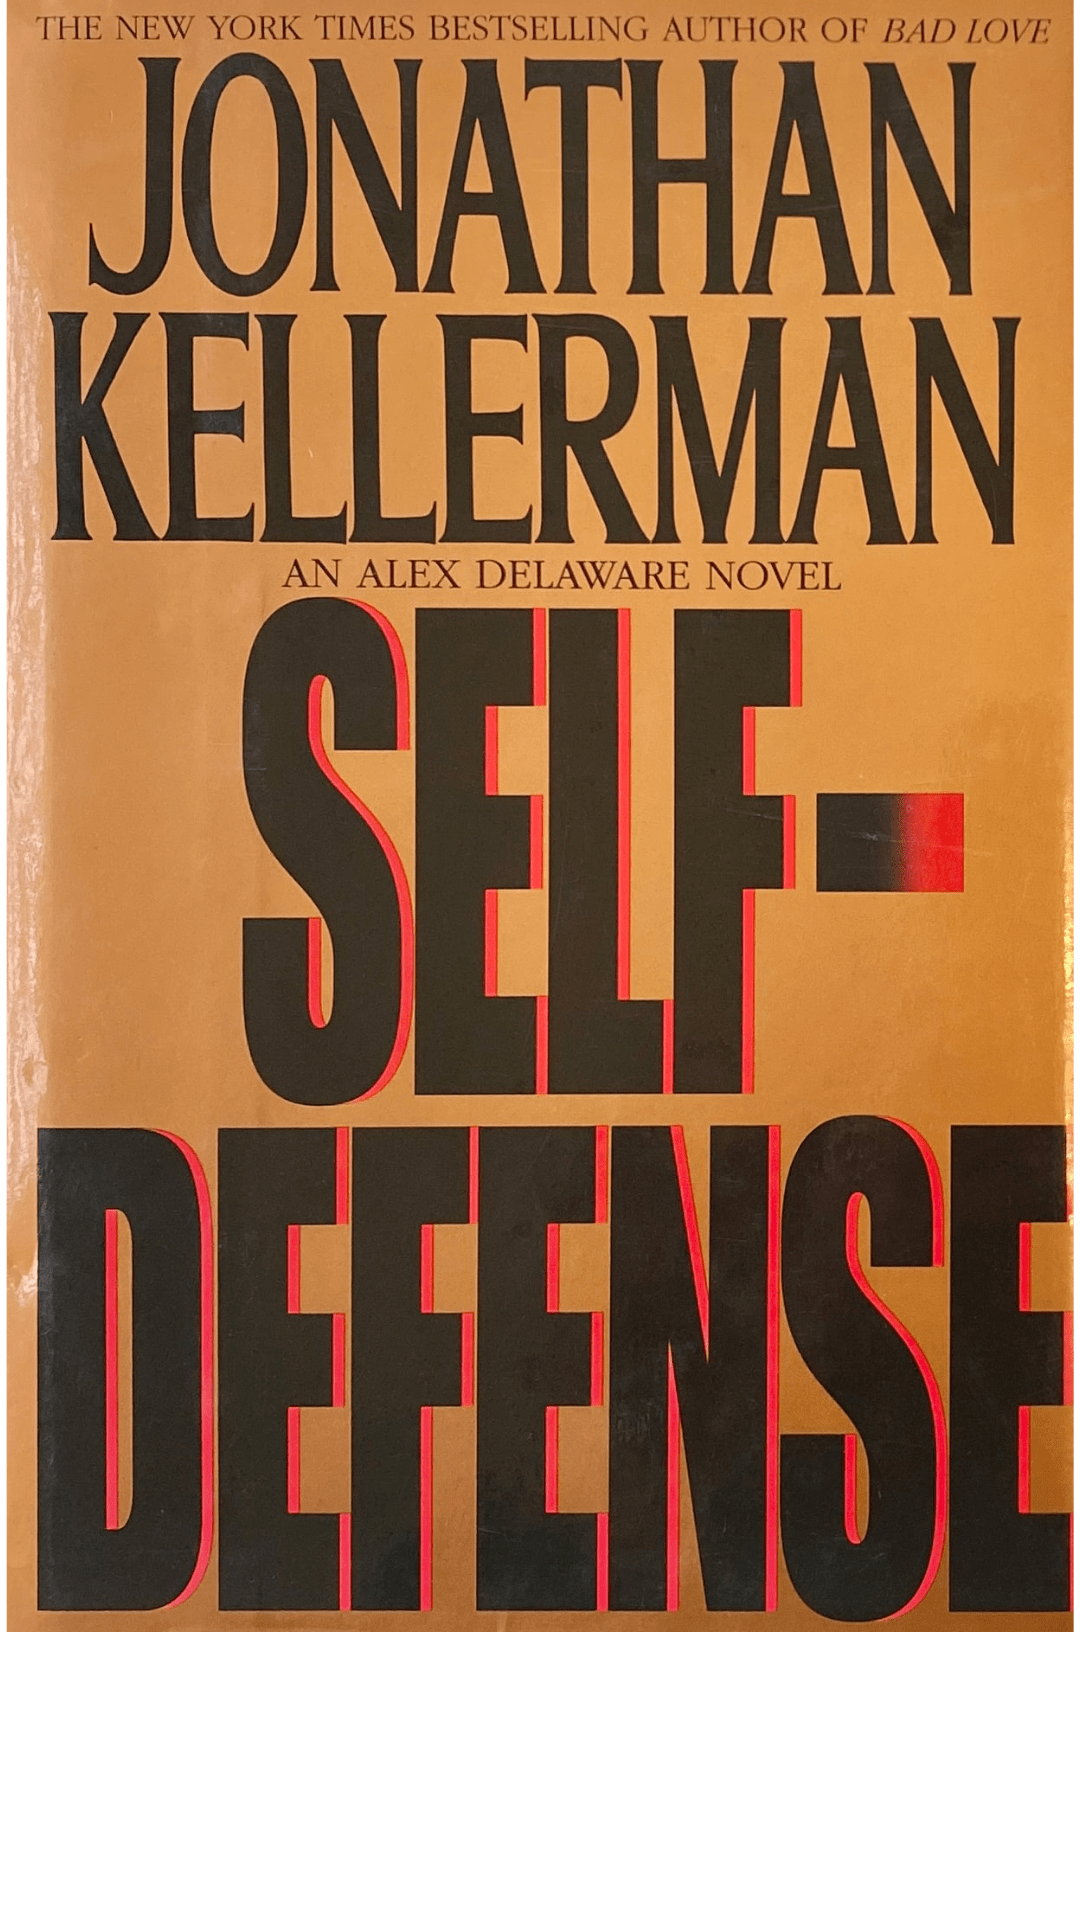 Self-Defense by Jonathan Kellerman